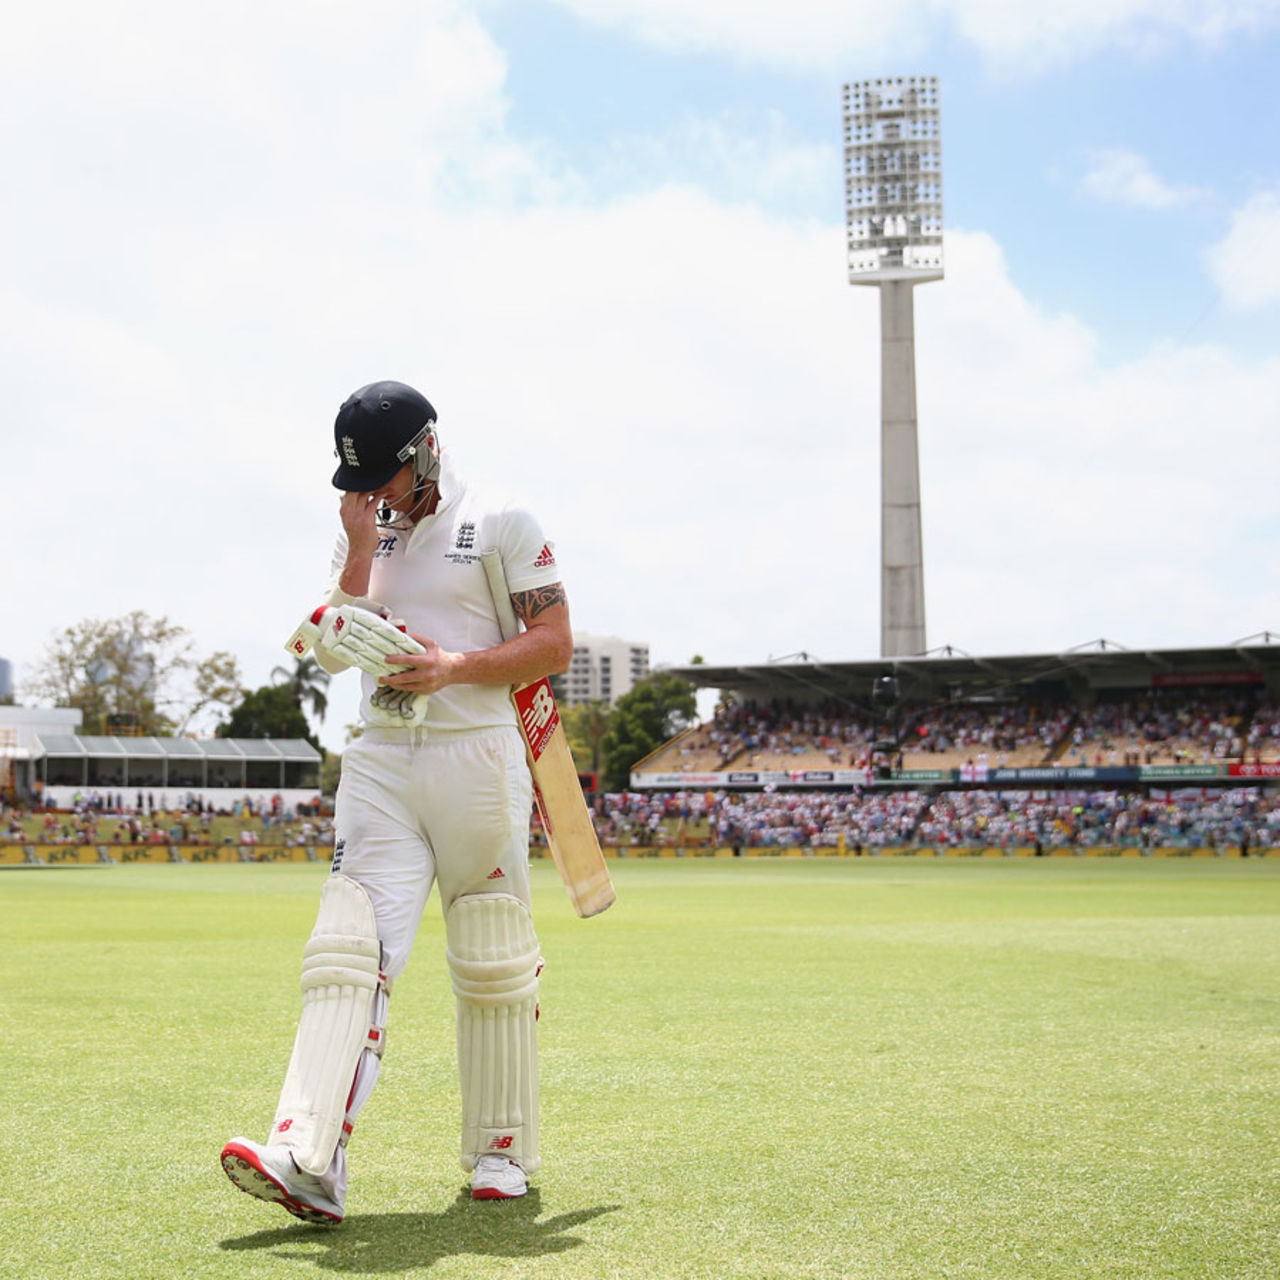 Ben Stokes walks off after making 120, Australia v England, Test, Perth, 5th day, December 17, 2013